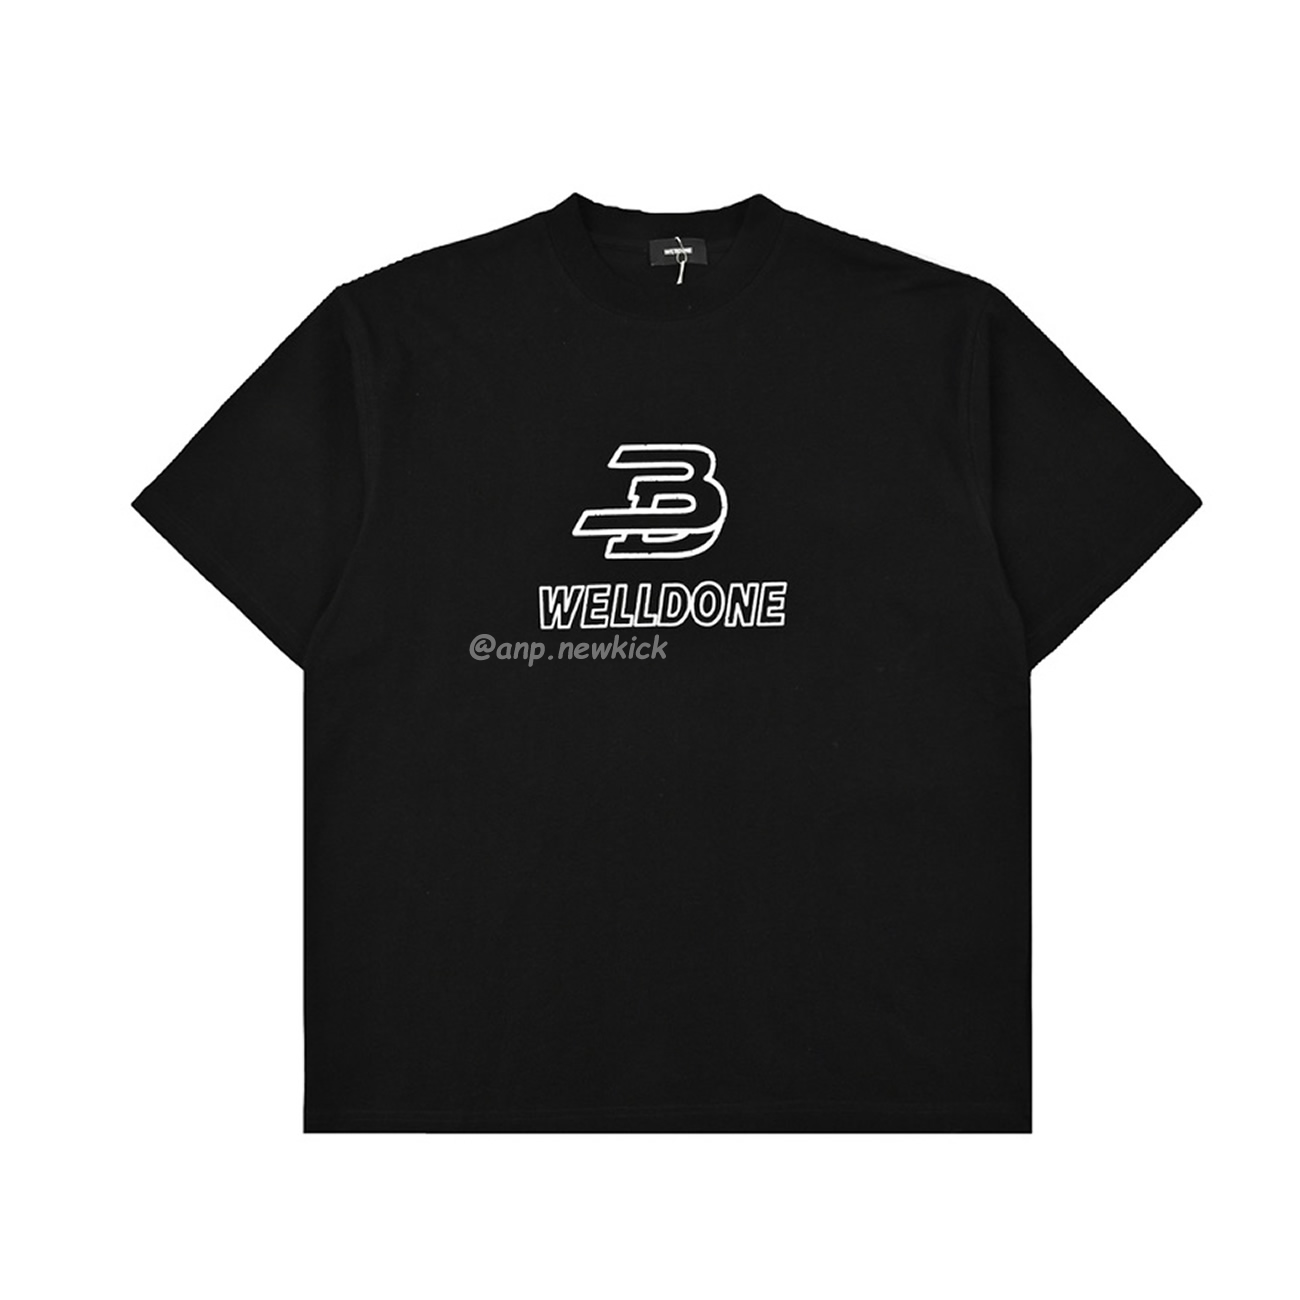 Welldone Letter Printing Black White T Shirt (3) - newkick.org